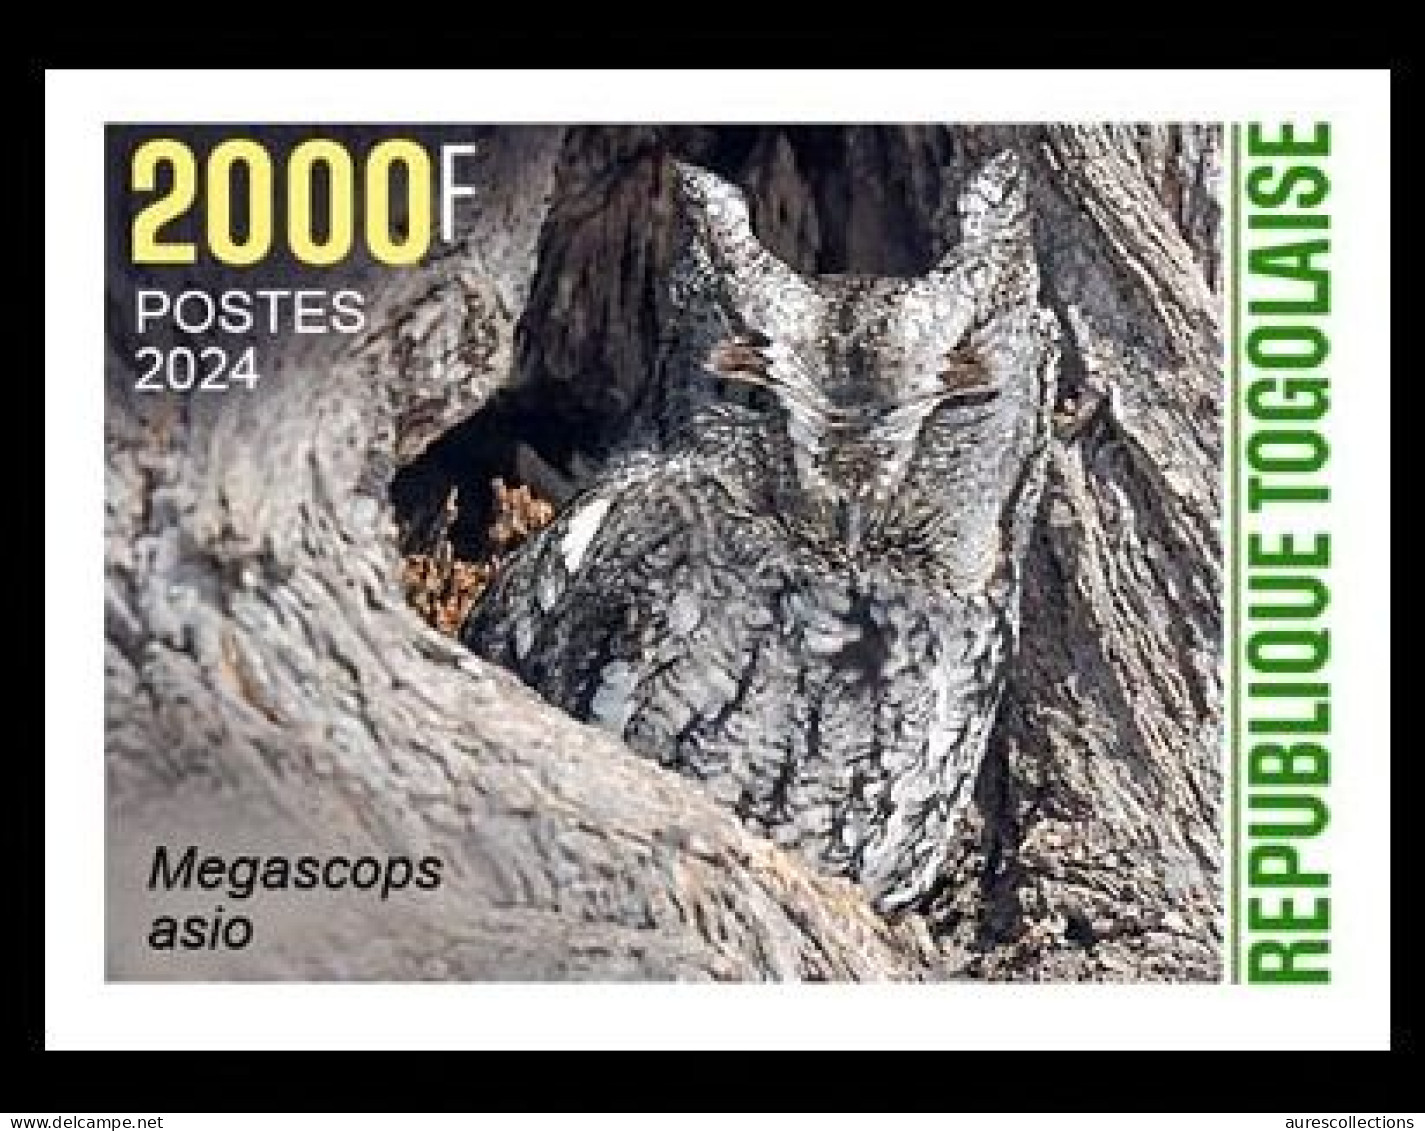 TOGO 2024 STAMP 1V IMPERF 2000F - CAMOUFLAGE - OWL OWLS HIBOU HIBOUX - BIRDS OISEAUX - MNH - Owls